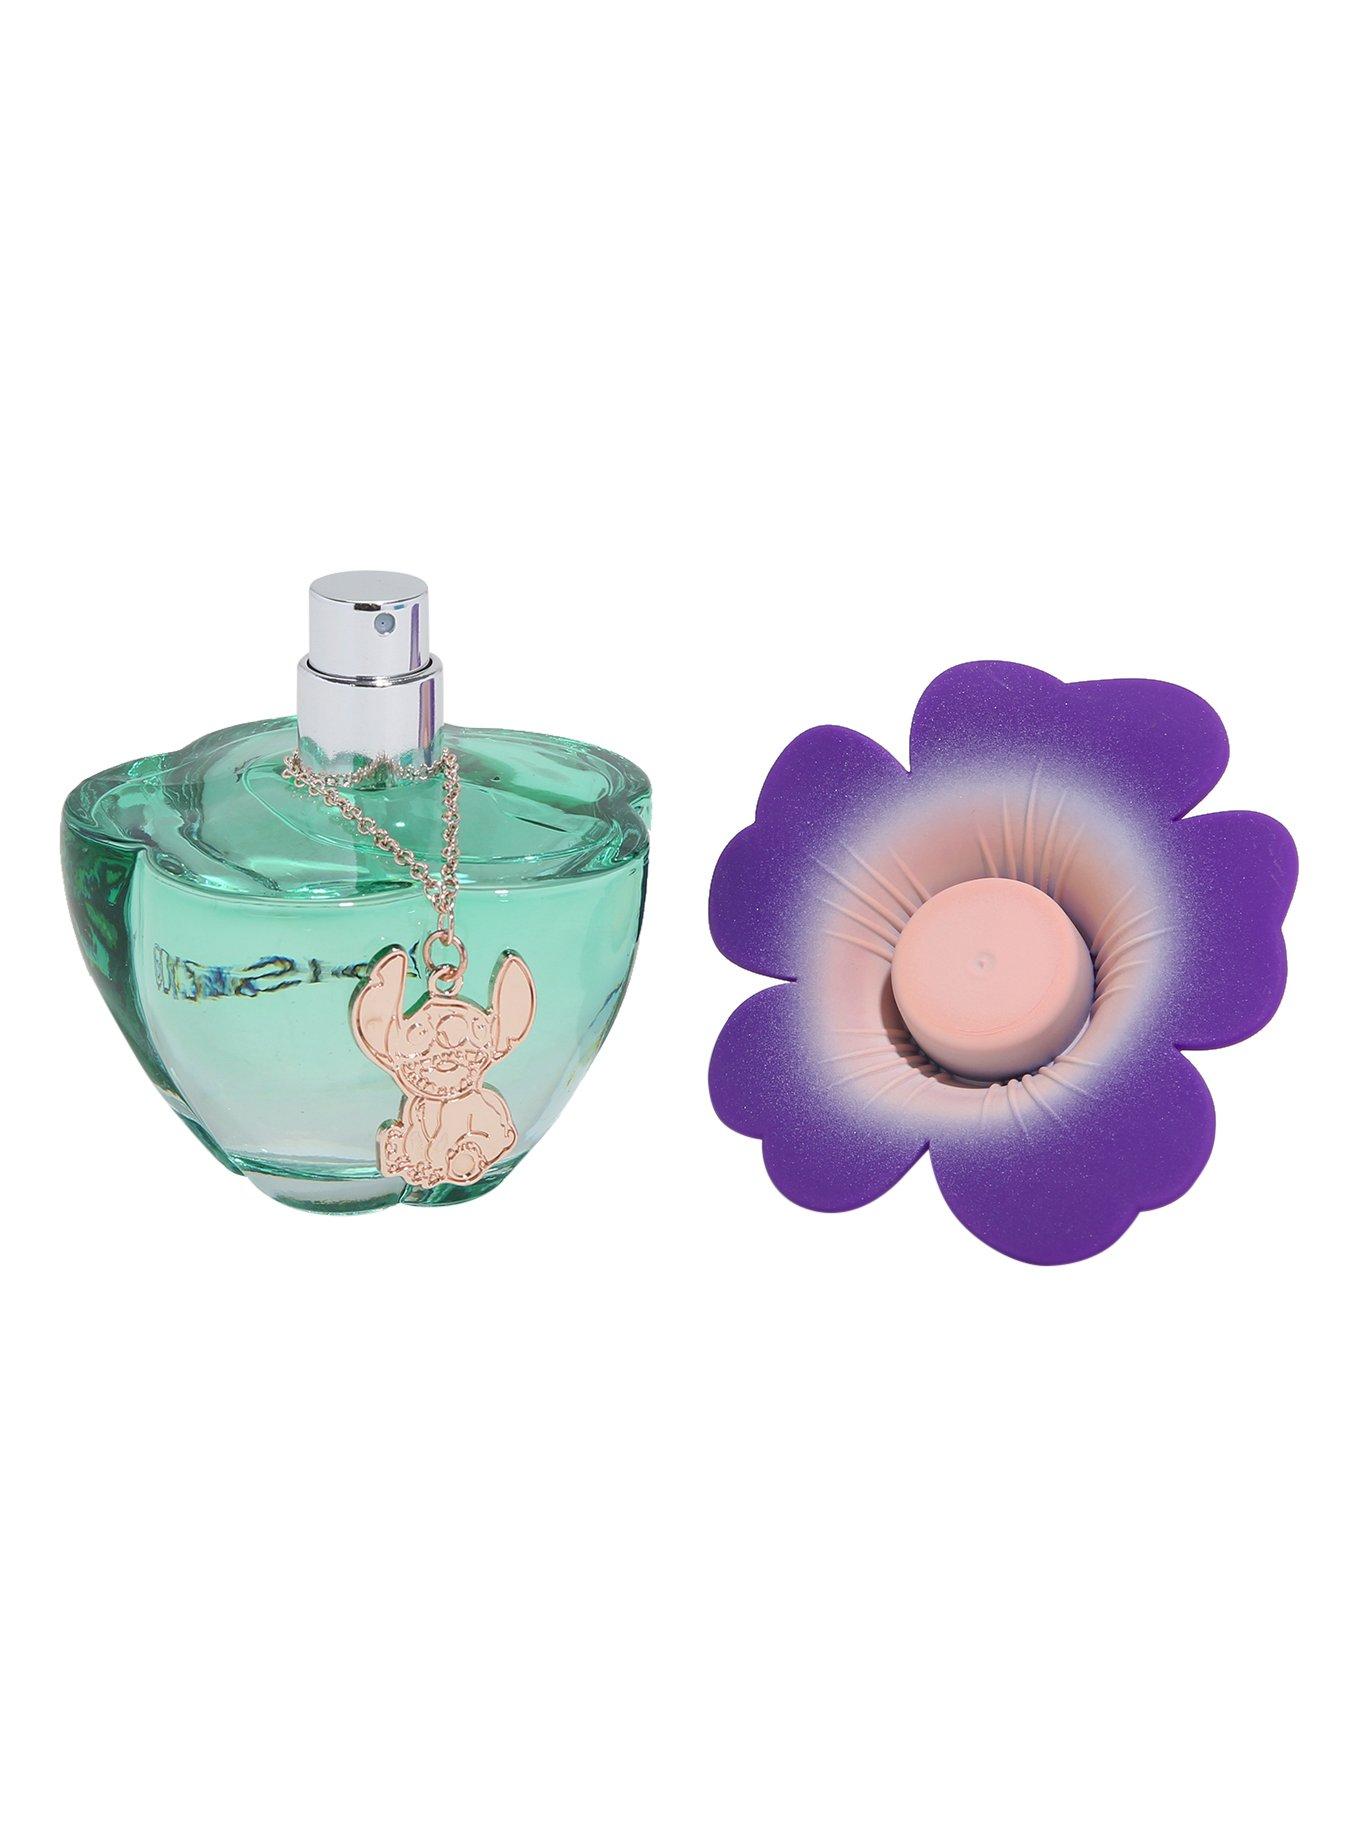 Torrid Disney Stitch Perfume Parfum Spray Mist 3.04 oz NEW 